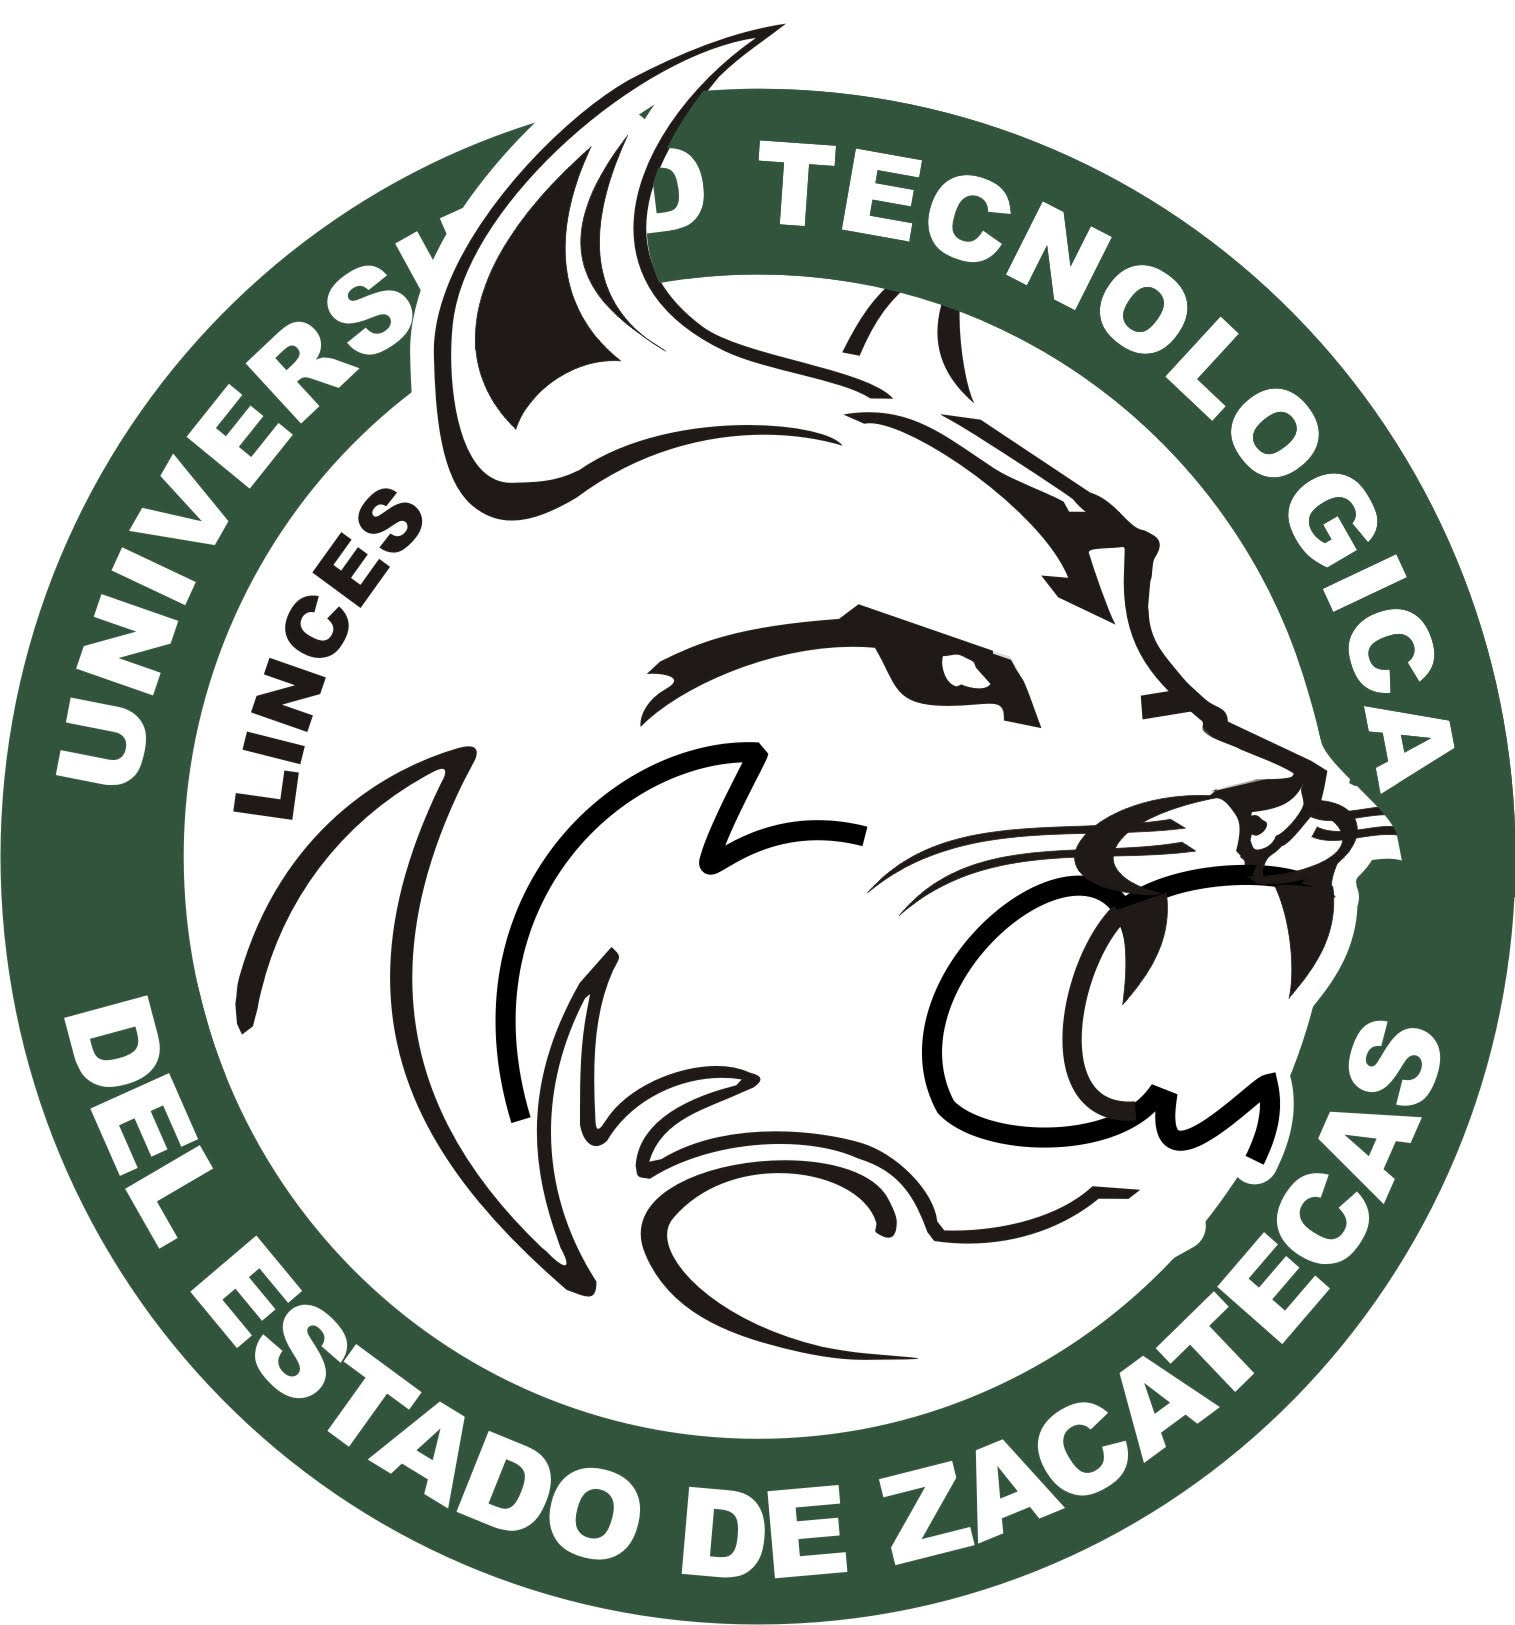 (Español) Histórica jornada para la UTZAC en materia deportiva